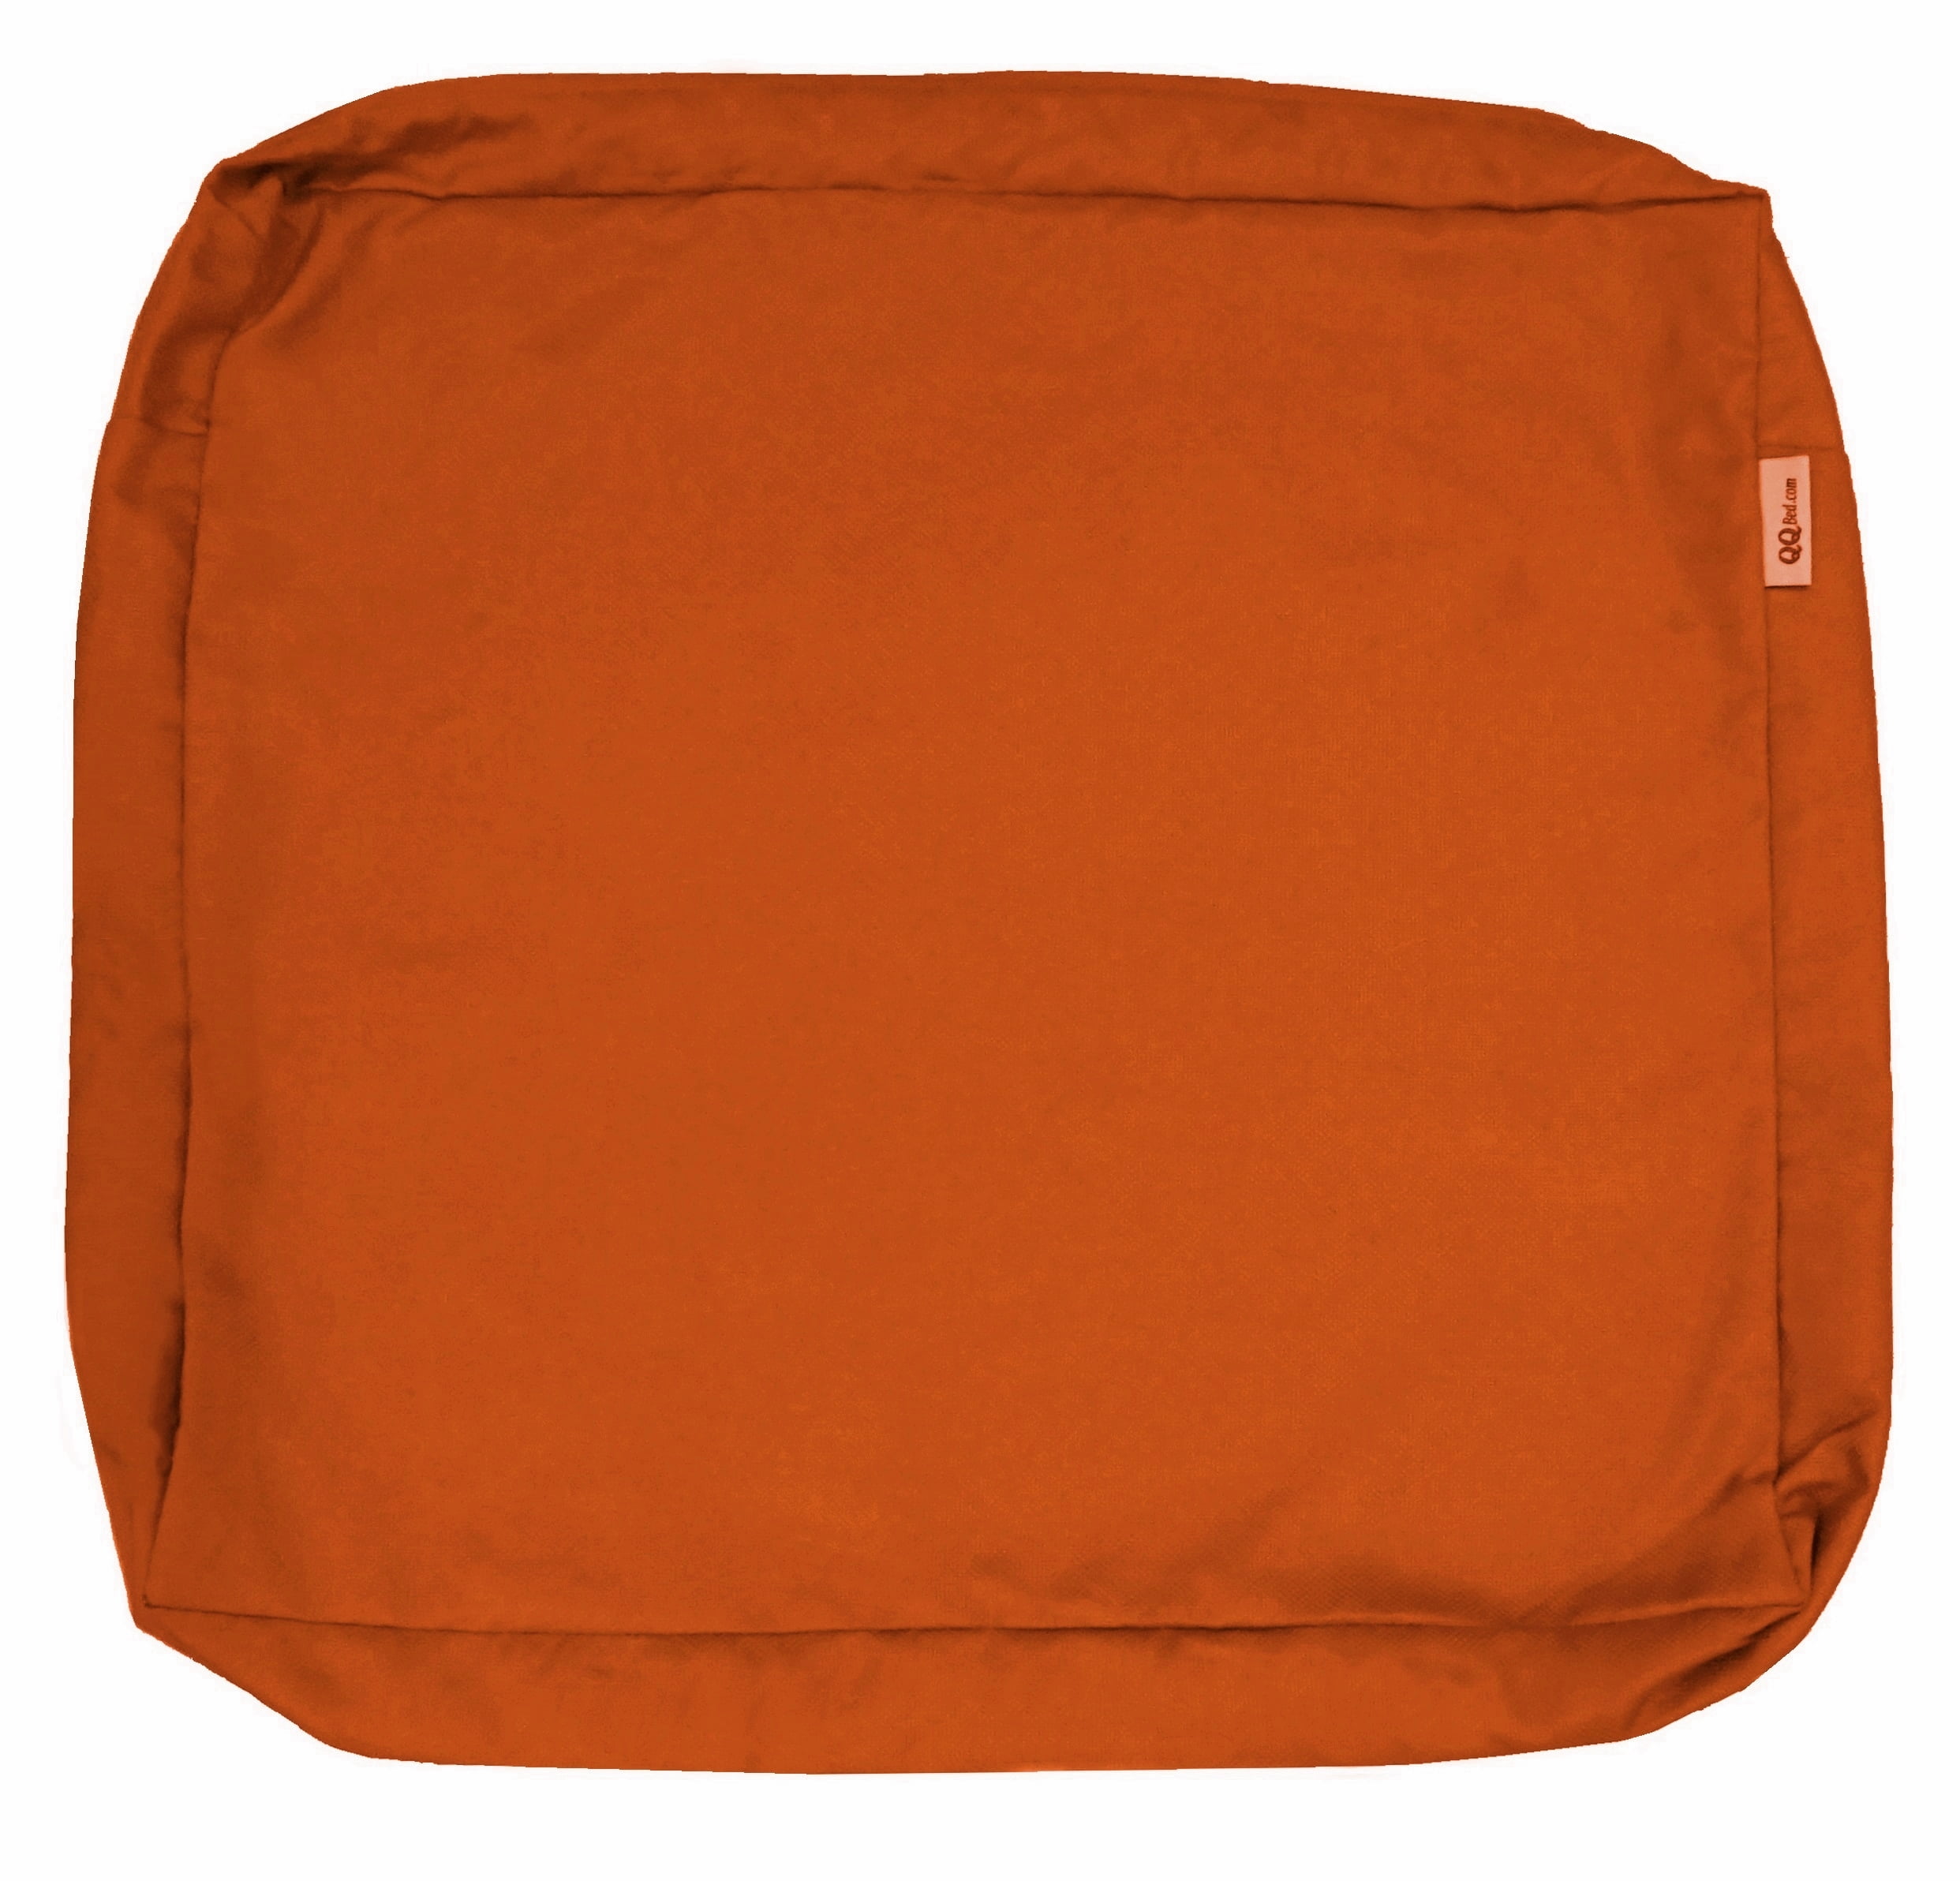 Waterproof Outdoor Seat Chair Patio Cushion Cover Duvet Case 20X18X4